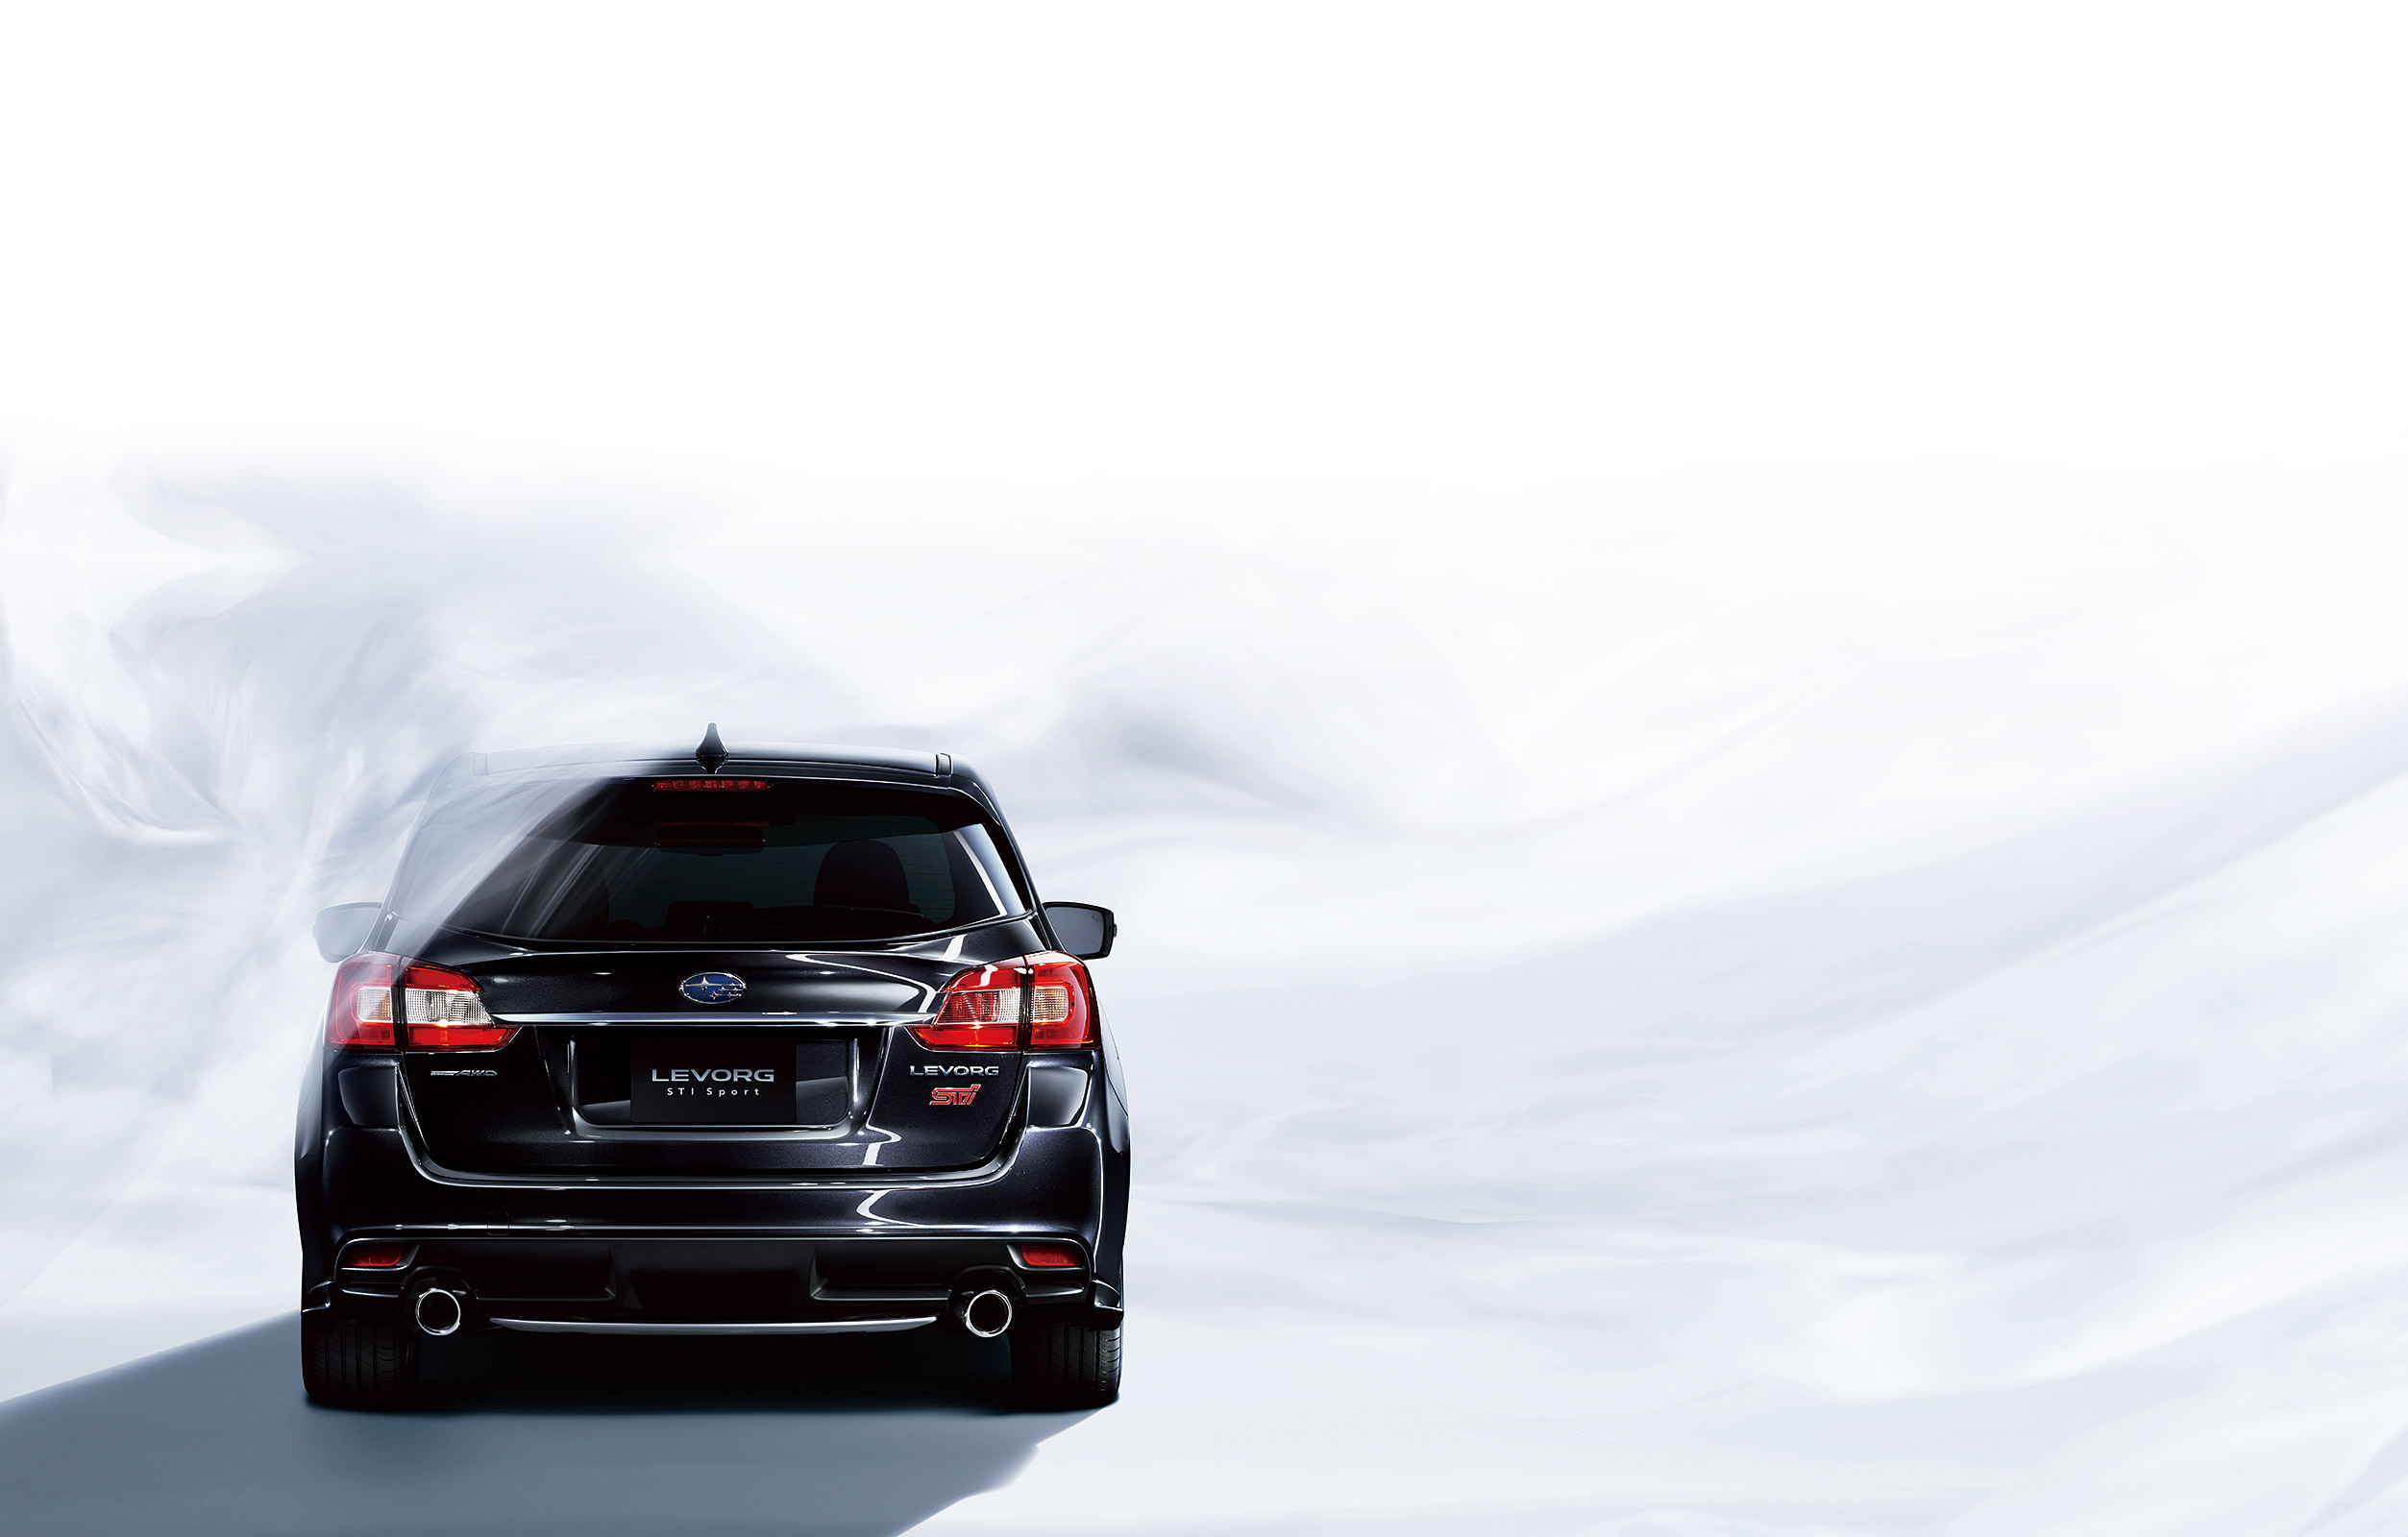  2016 Subaru Levorg STI Sport Wallpaper.